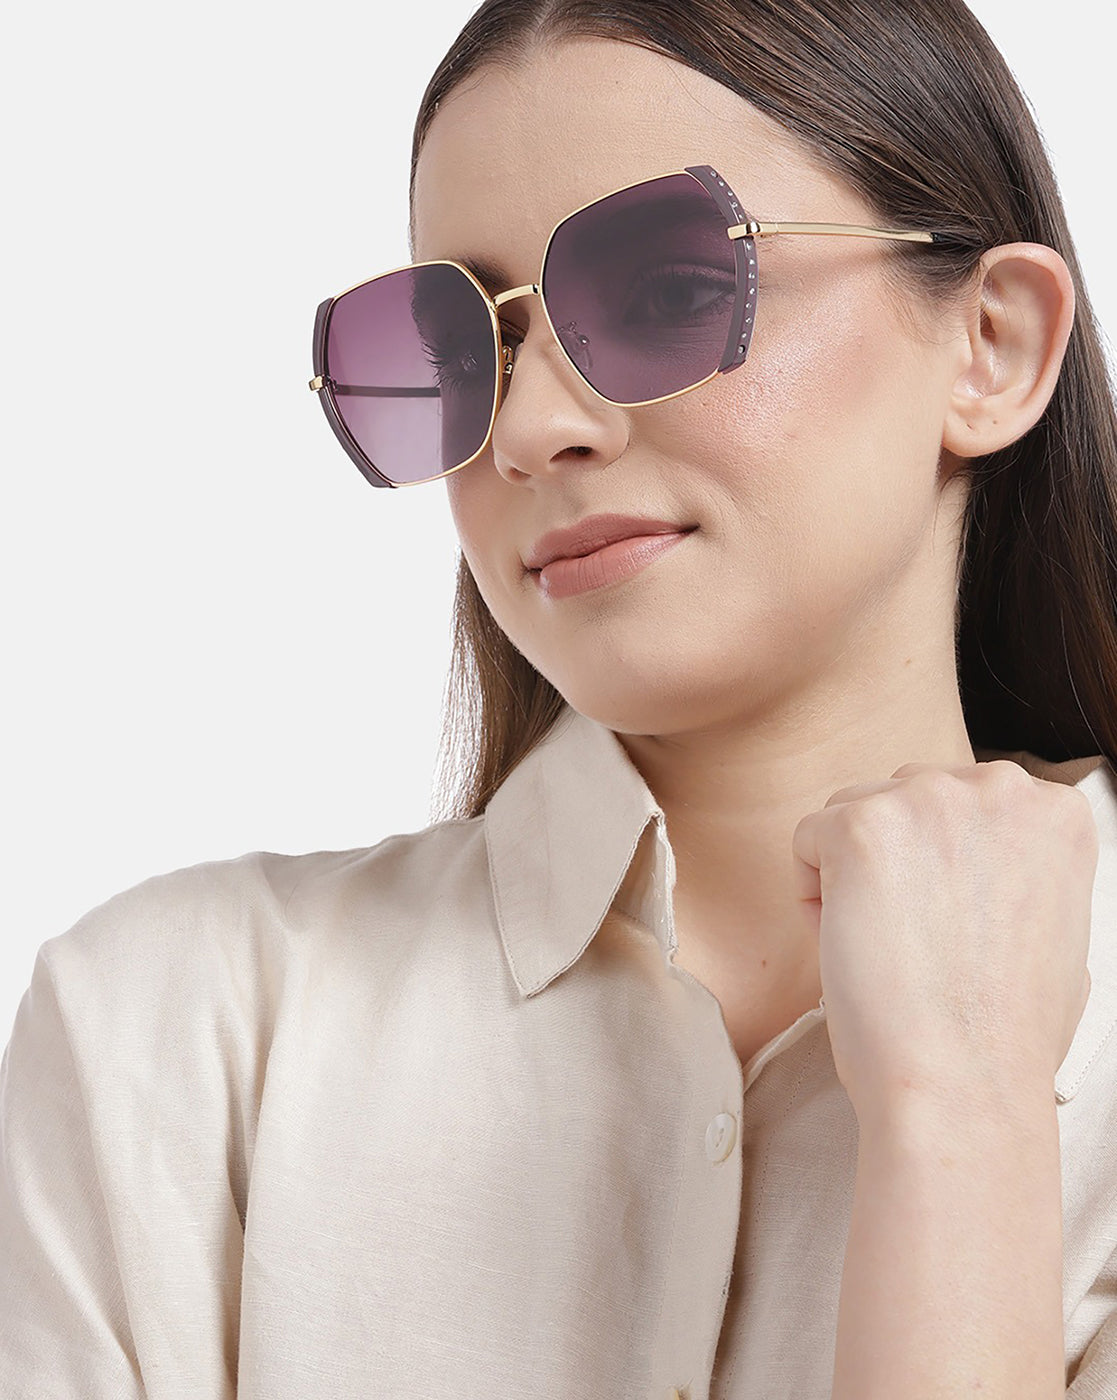 Carlton London Oversized Sunglasses With Uv Protected Lens For Women